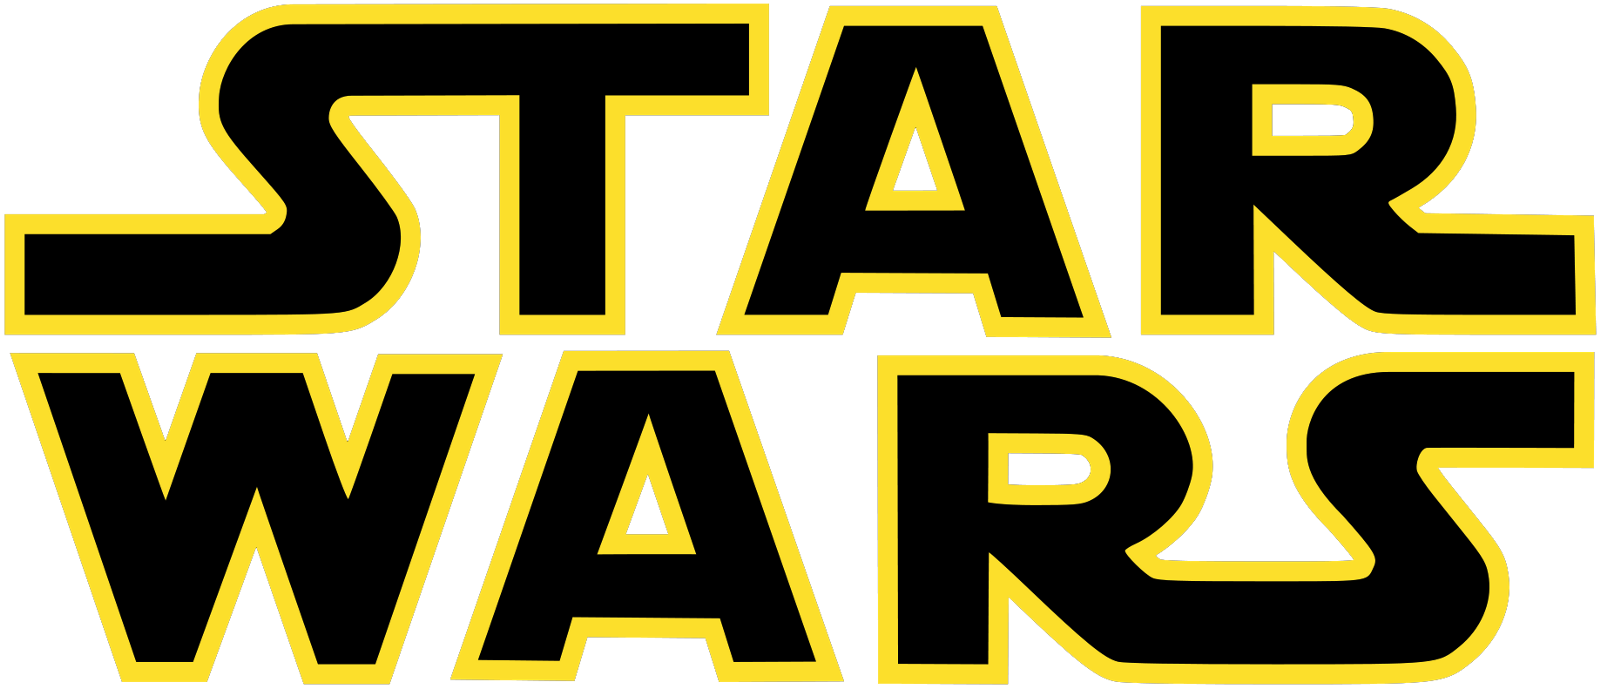 Star Area Text Skywalker Wars Anakin Logo PNG Image